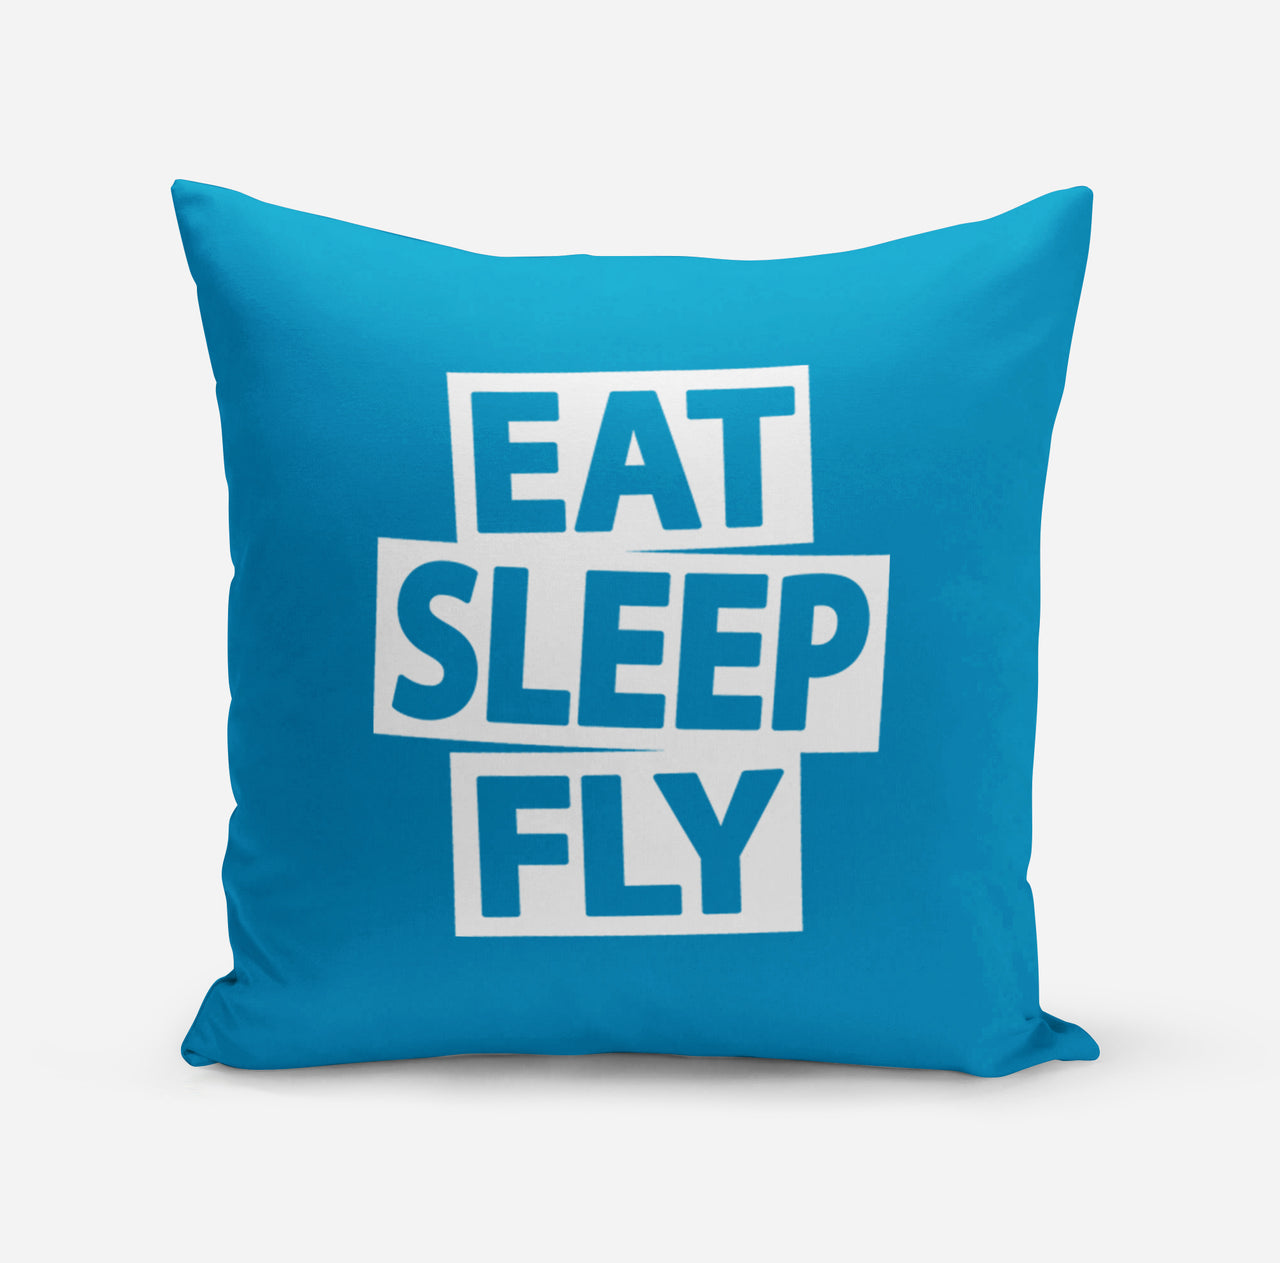 Eat Sleep Fly Designed Pillows